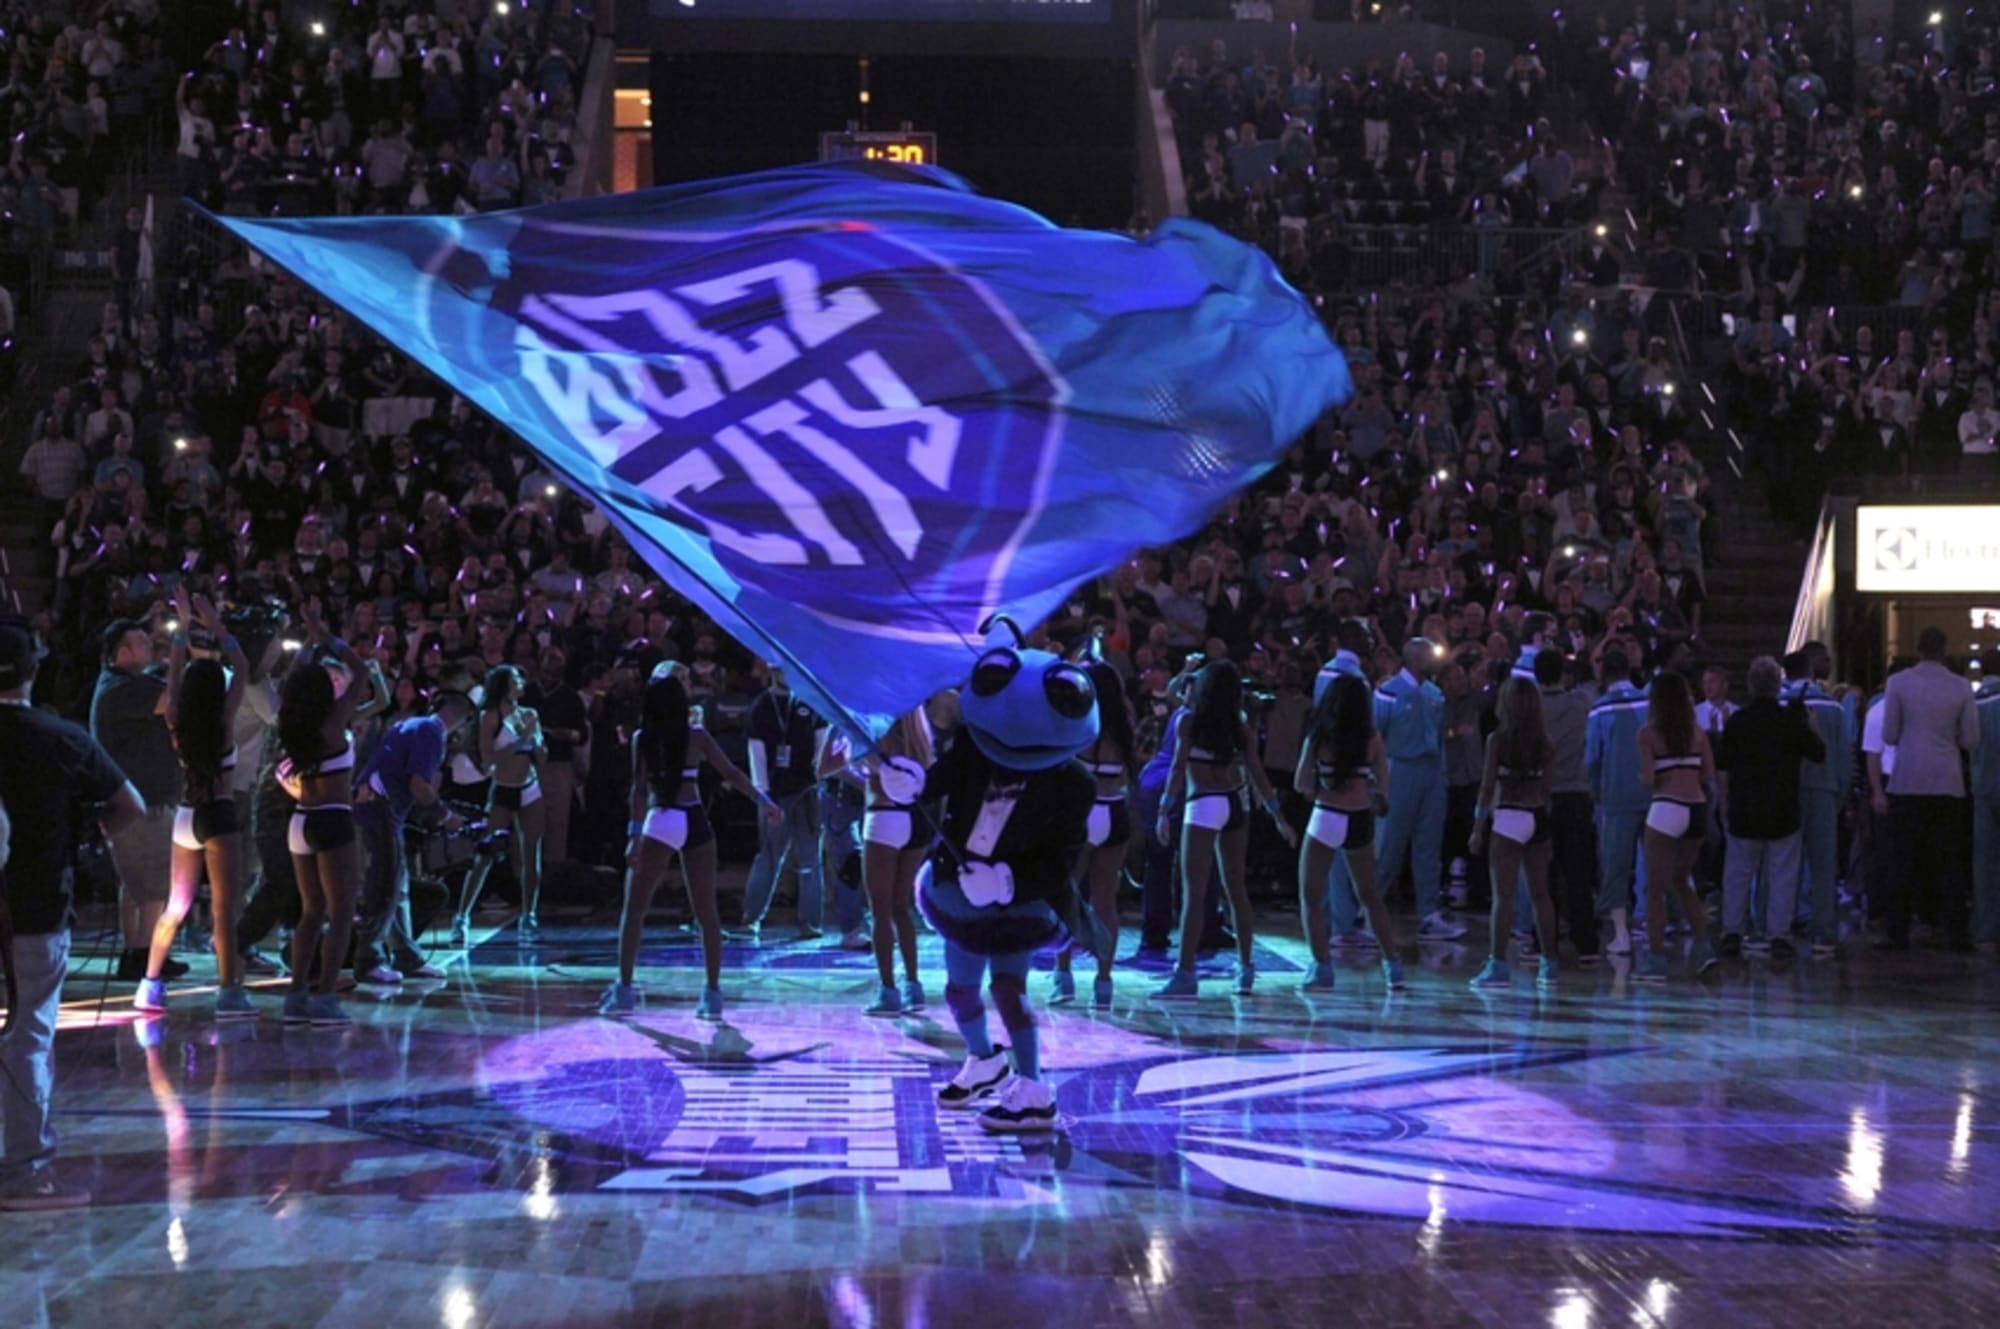 NBA Buzz - Milwaukee Bucks will bring back their purple 